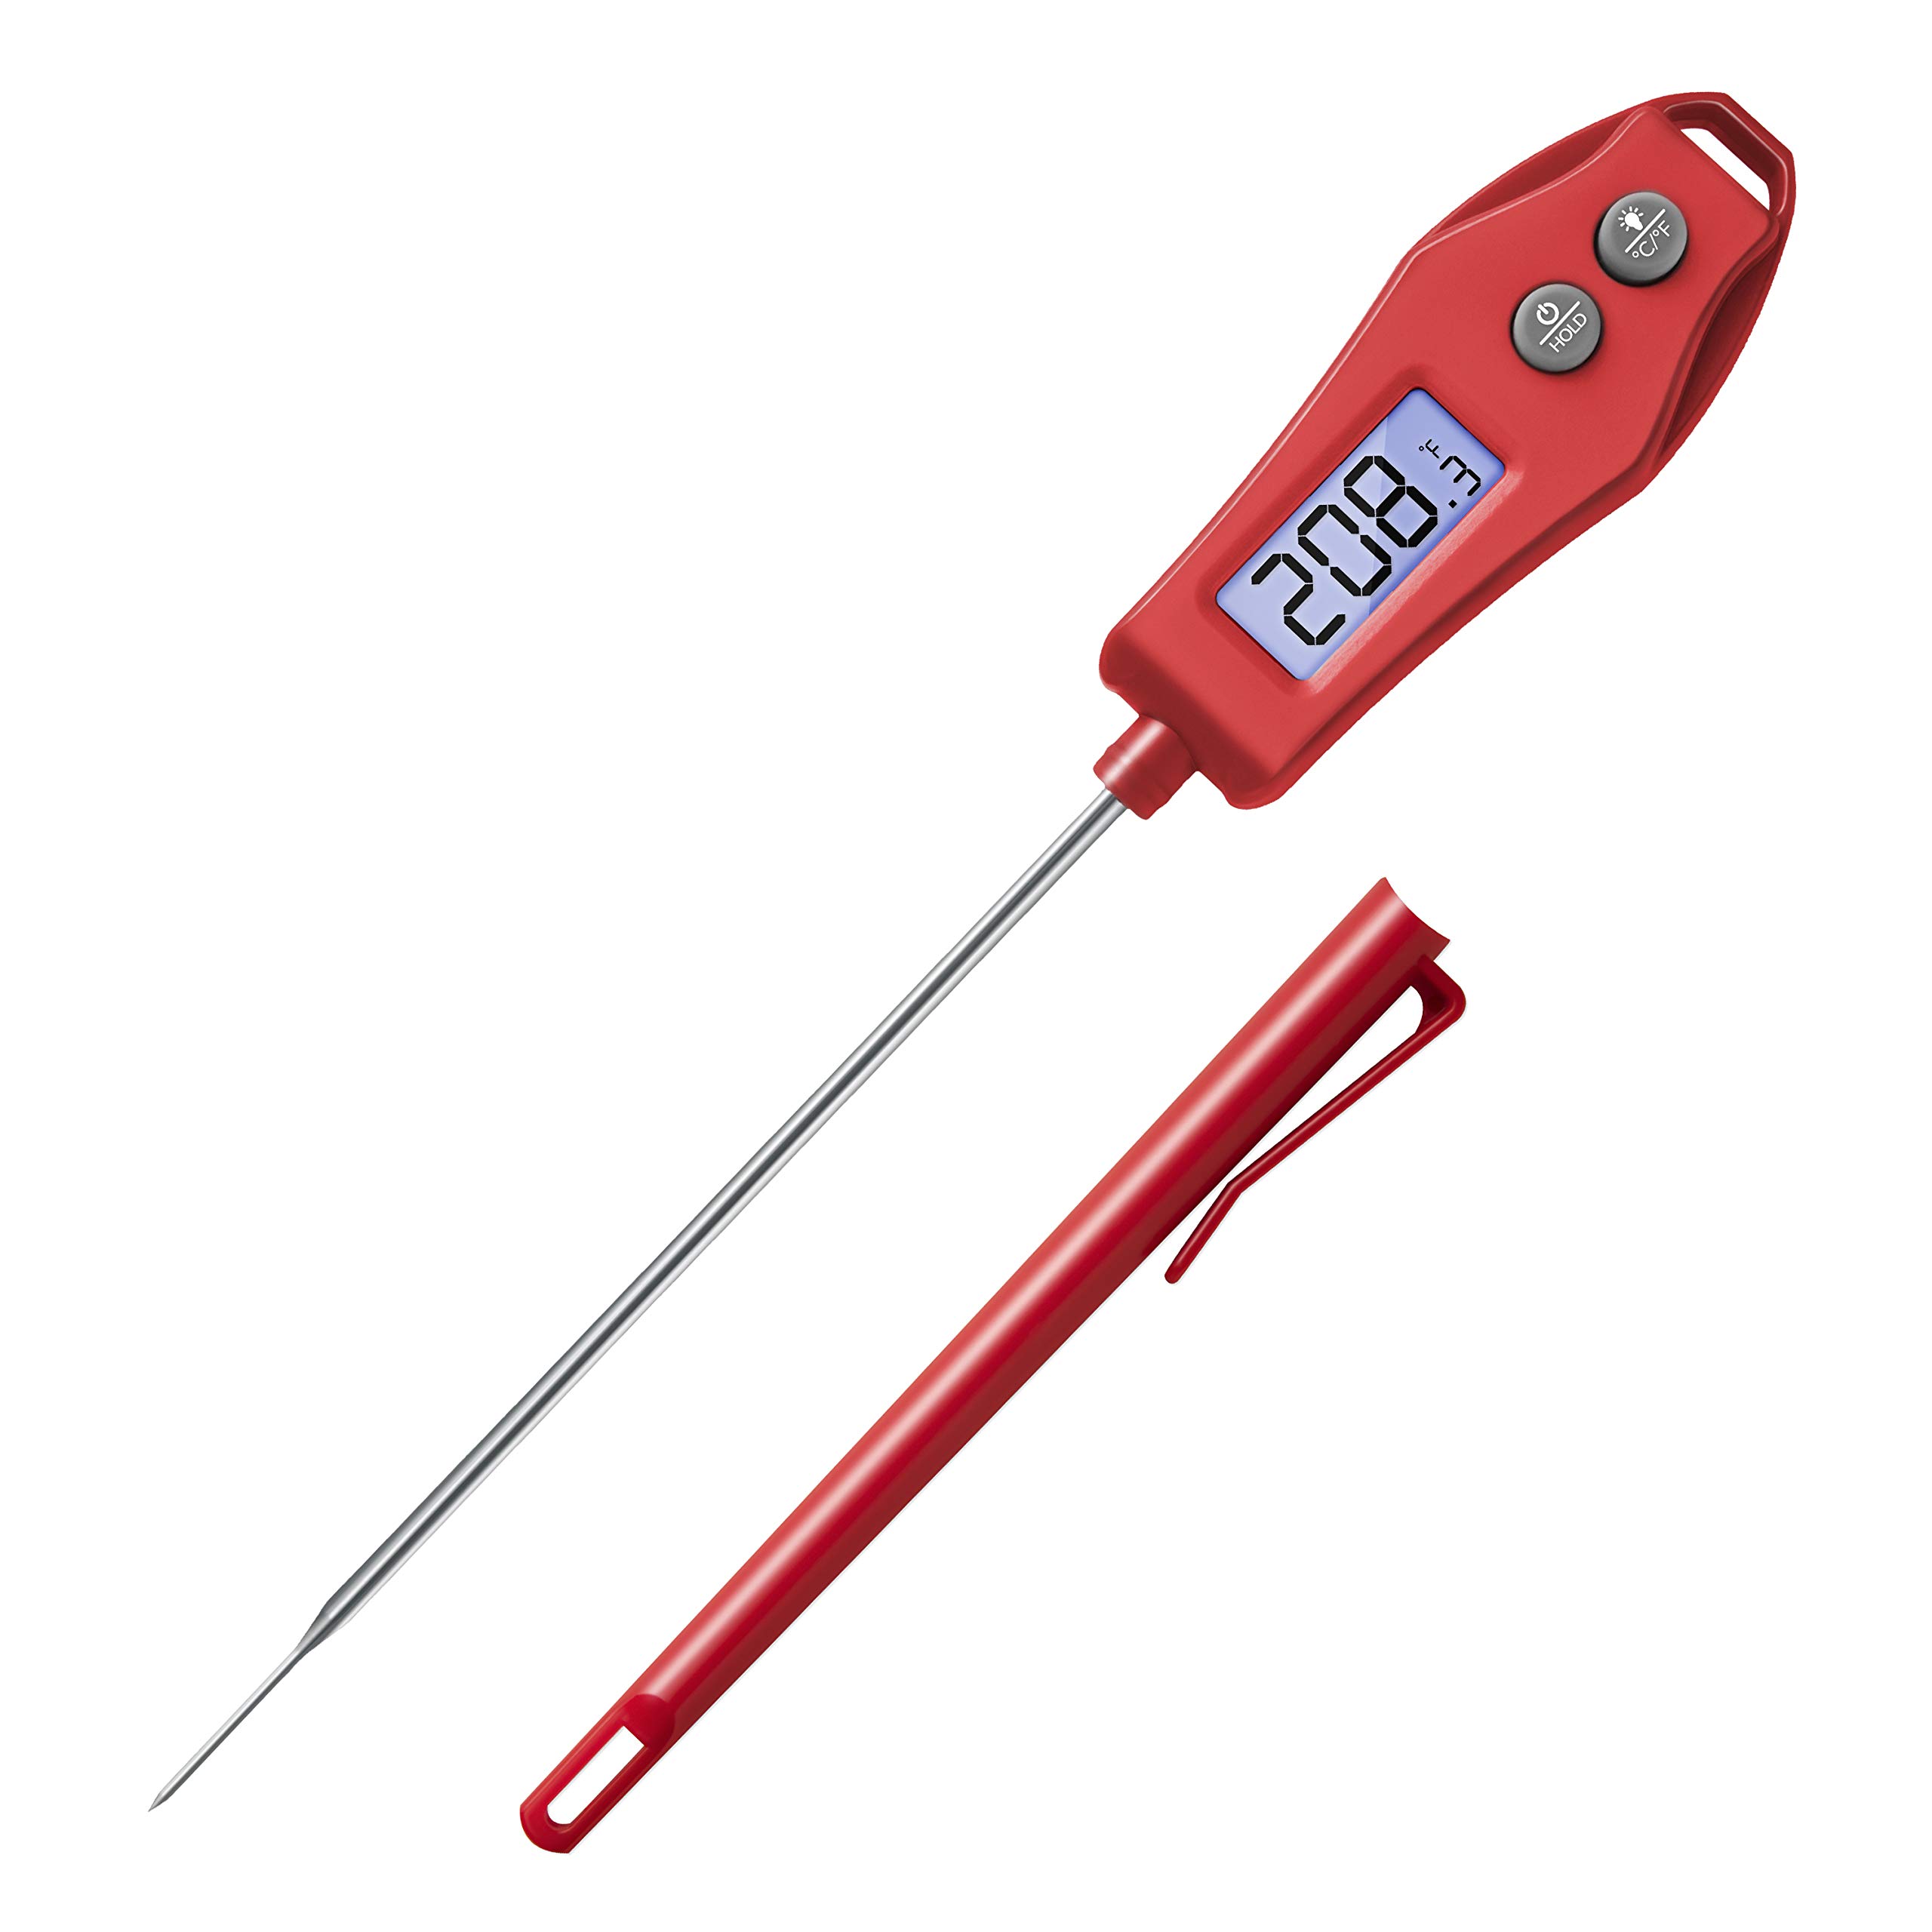 Etekcity EMT100 Digital Instant Read Meat Thermometer, 5